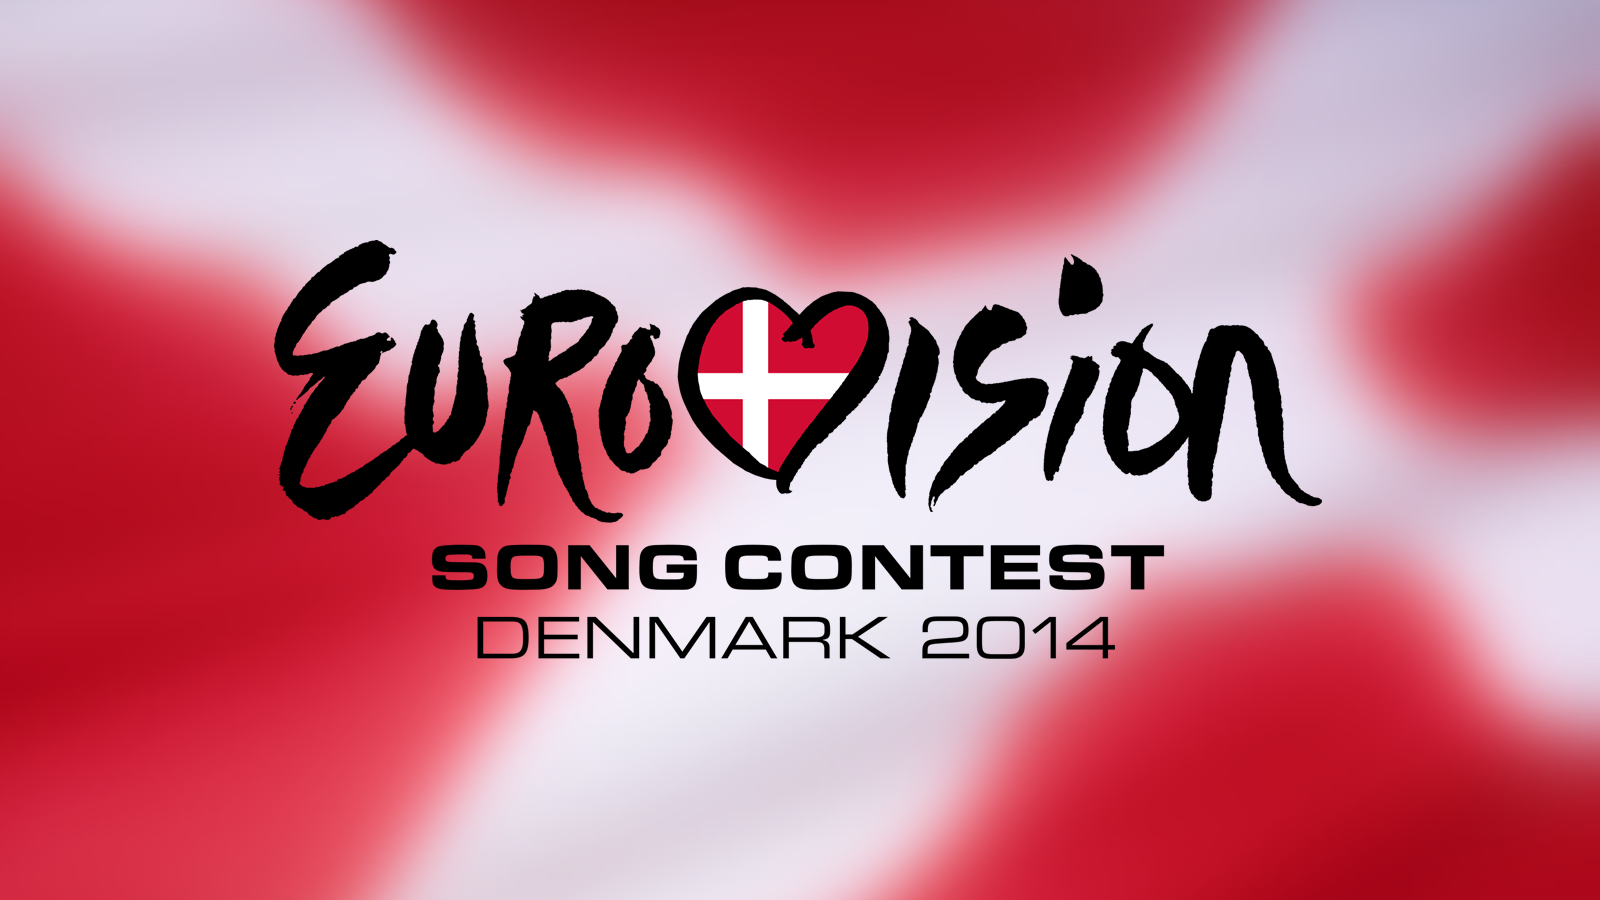 Eurovision 2014. Oddities - Denmark!